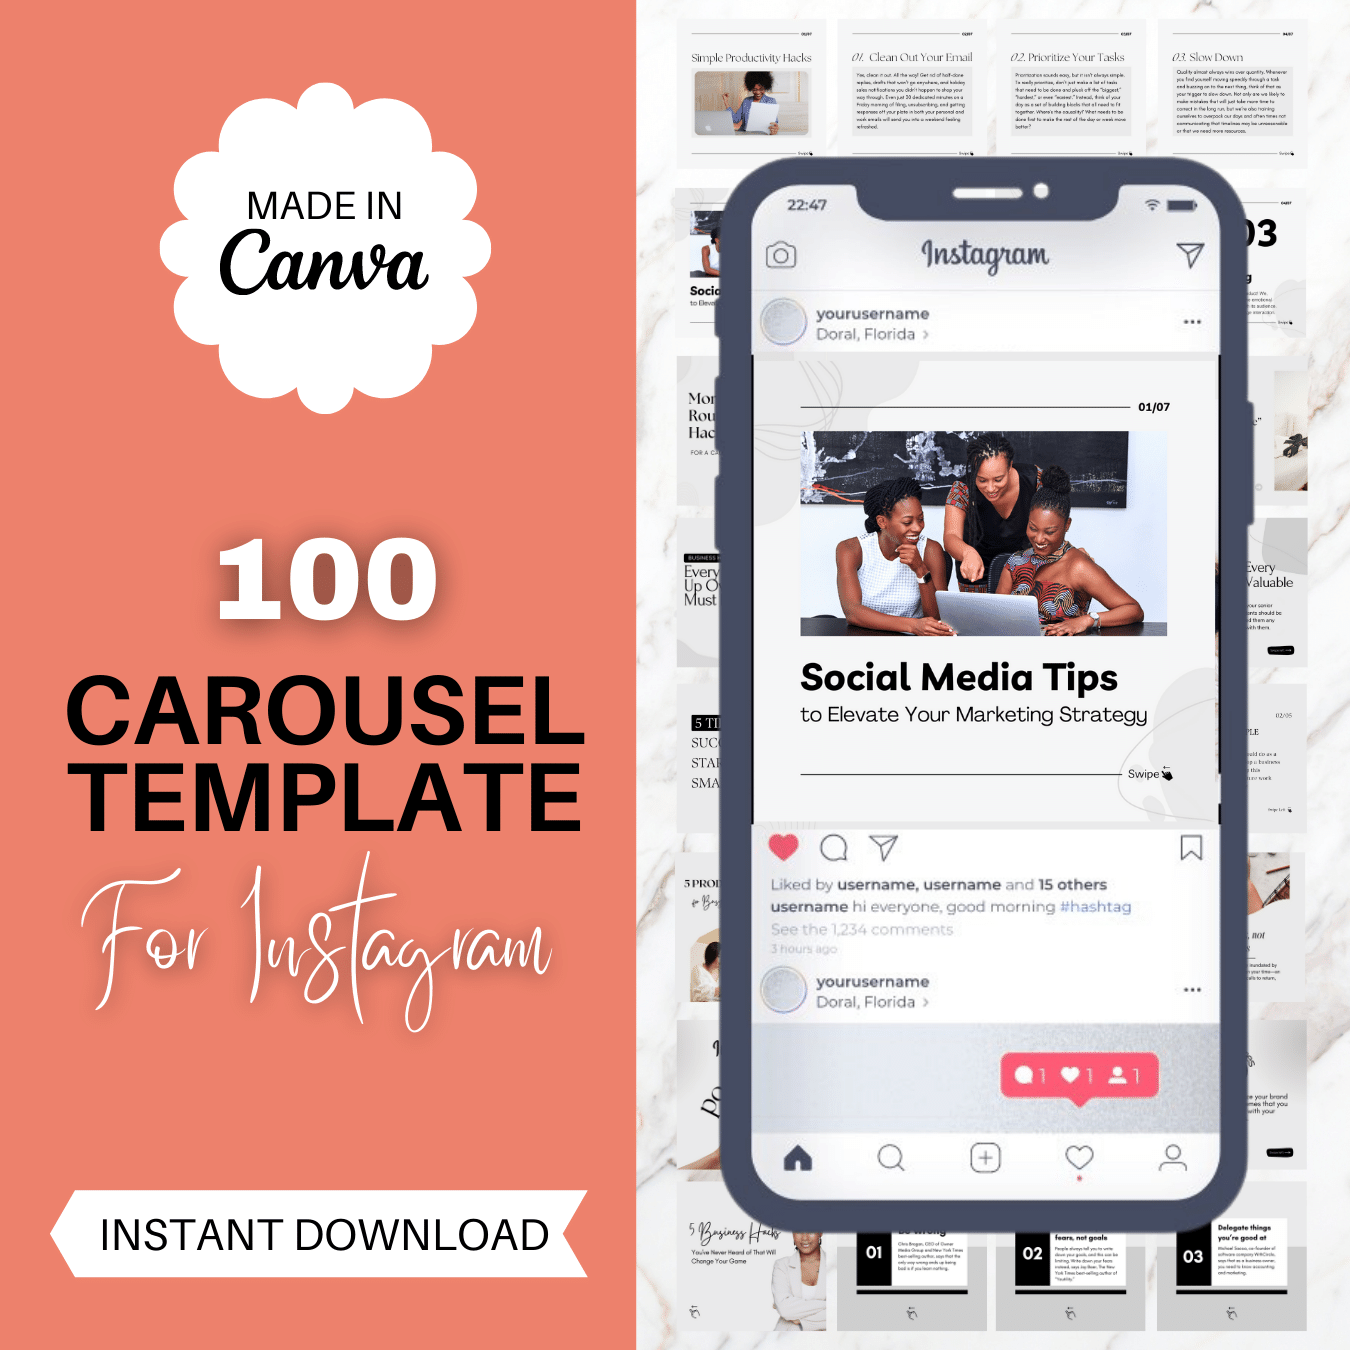 100 Carousel Template For Instagram 